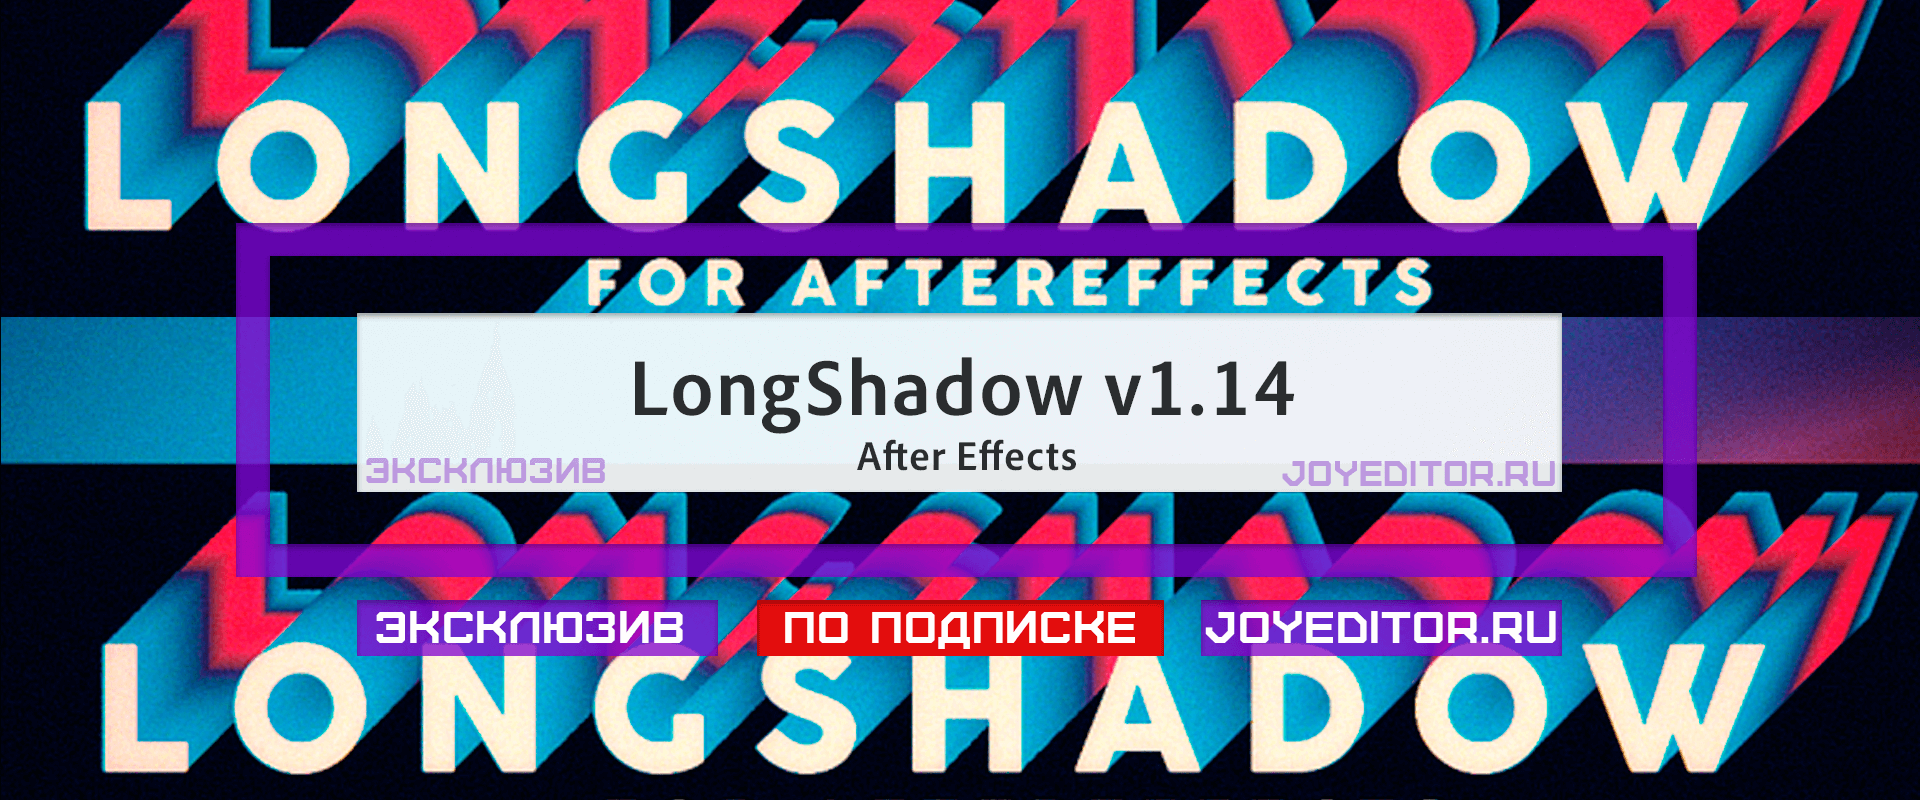 LongShadow v1.14